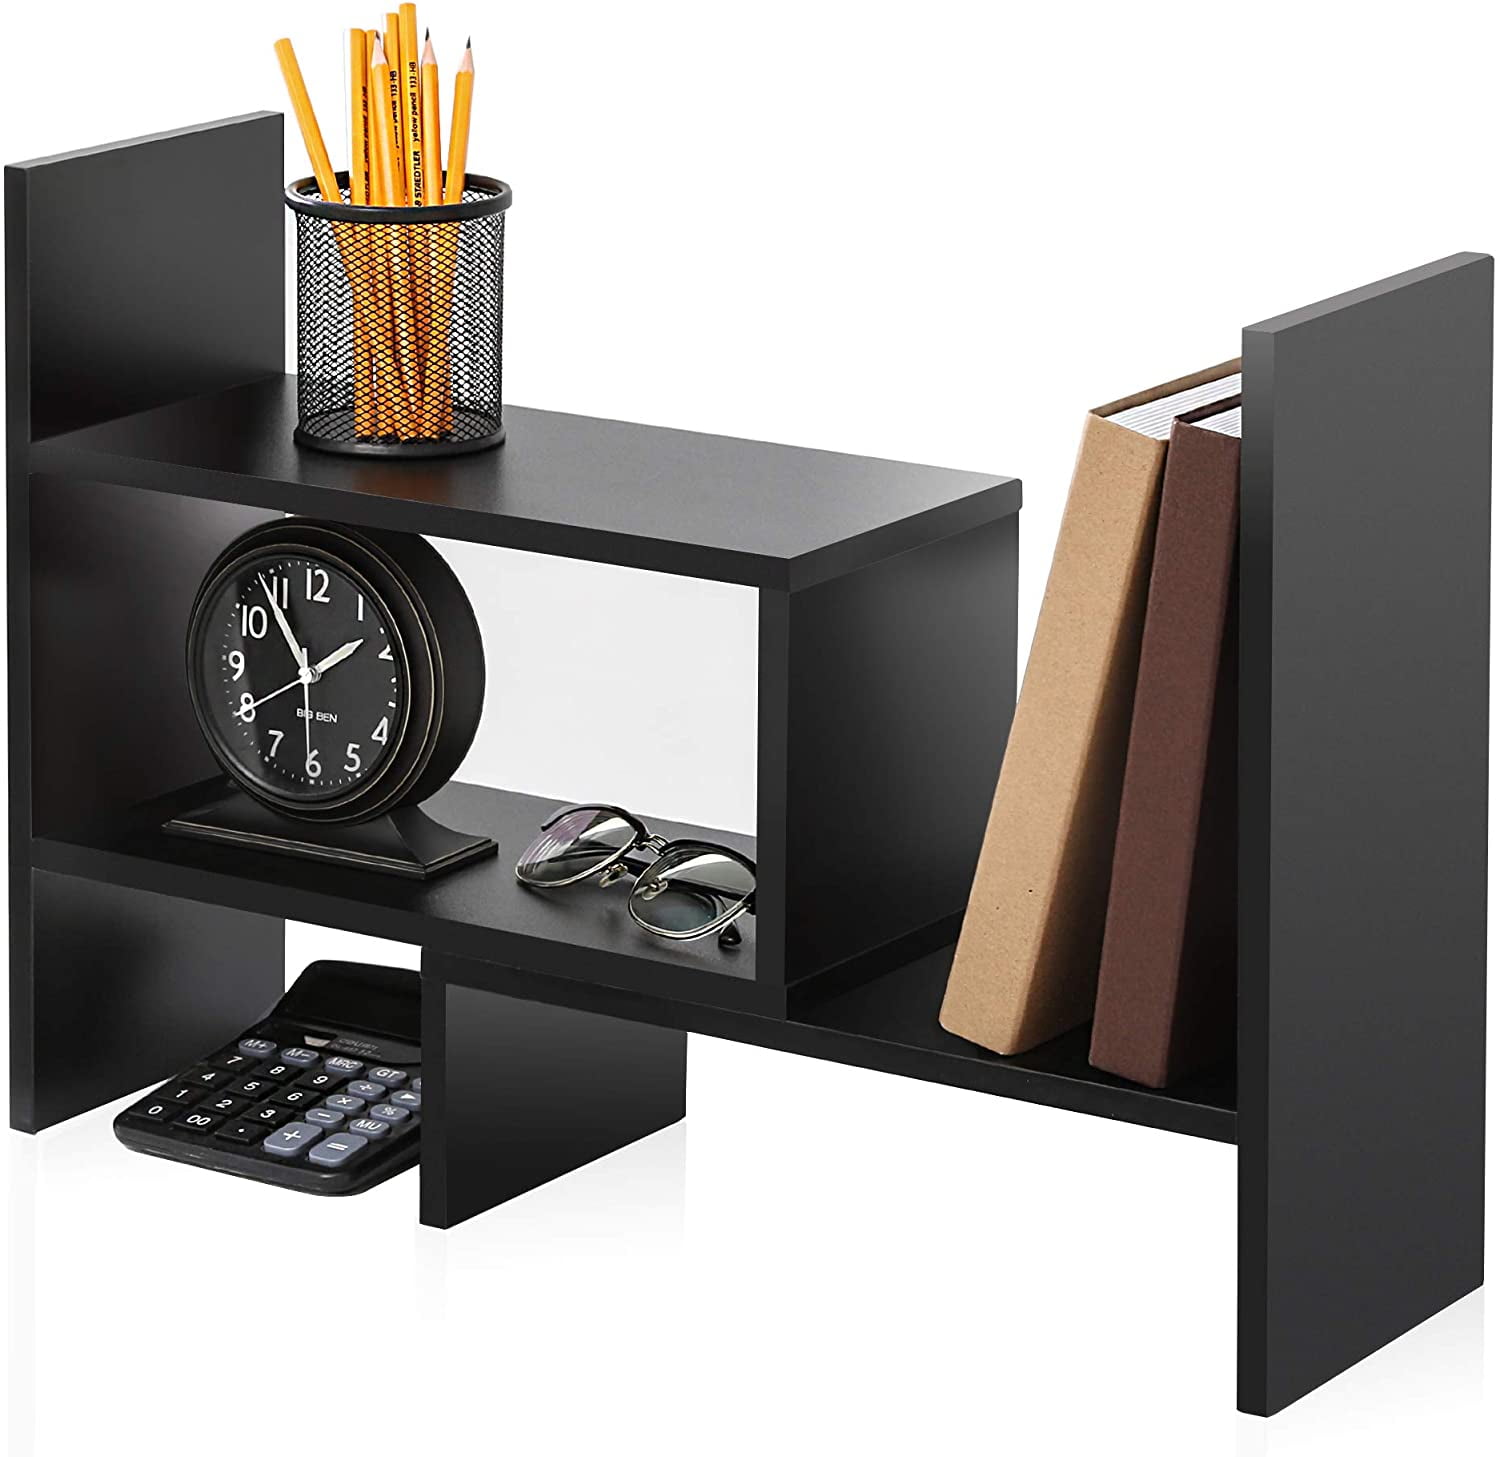 fitueyes-wood-adjustable-display-shelf-desktop-organizer-office-storage